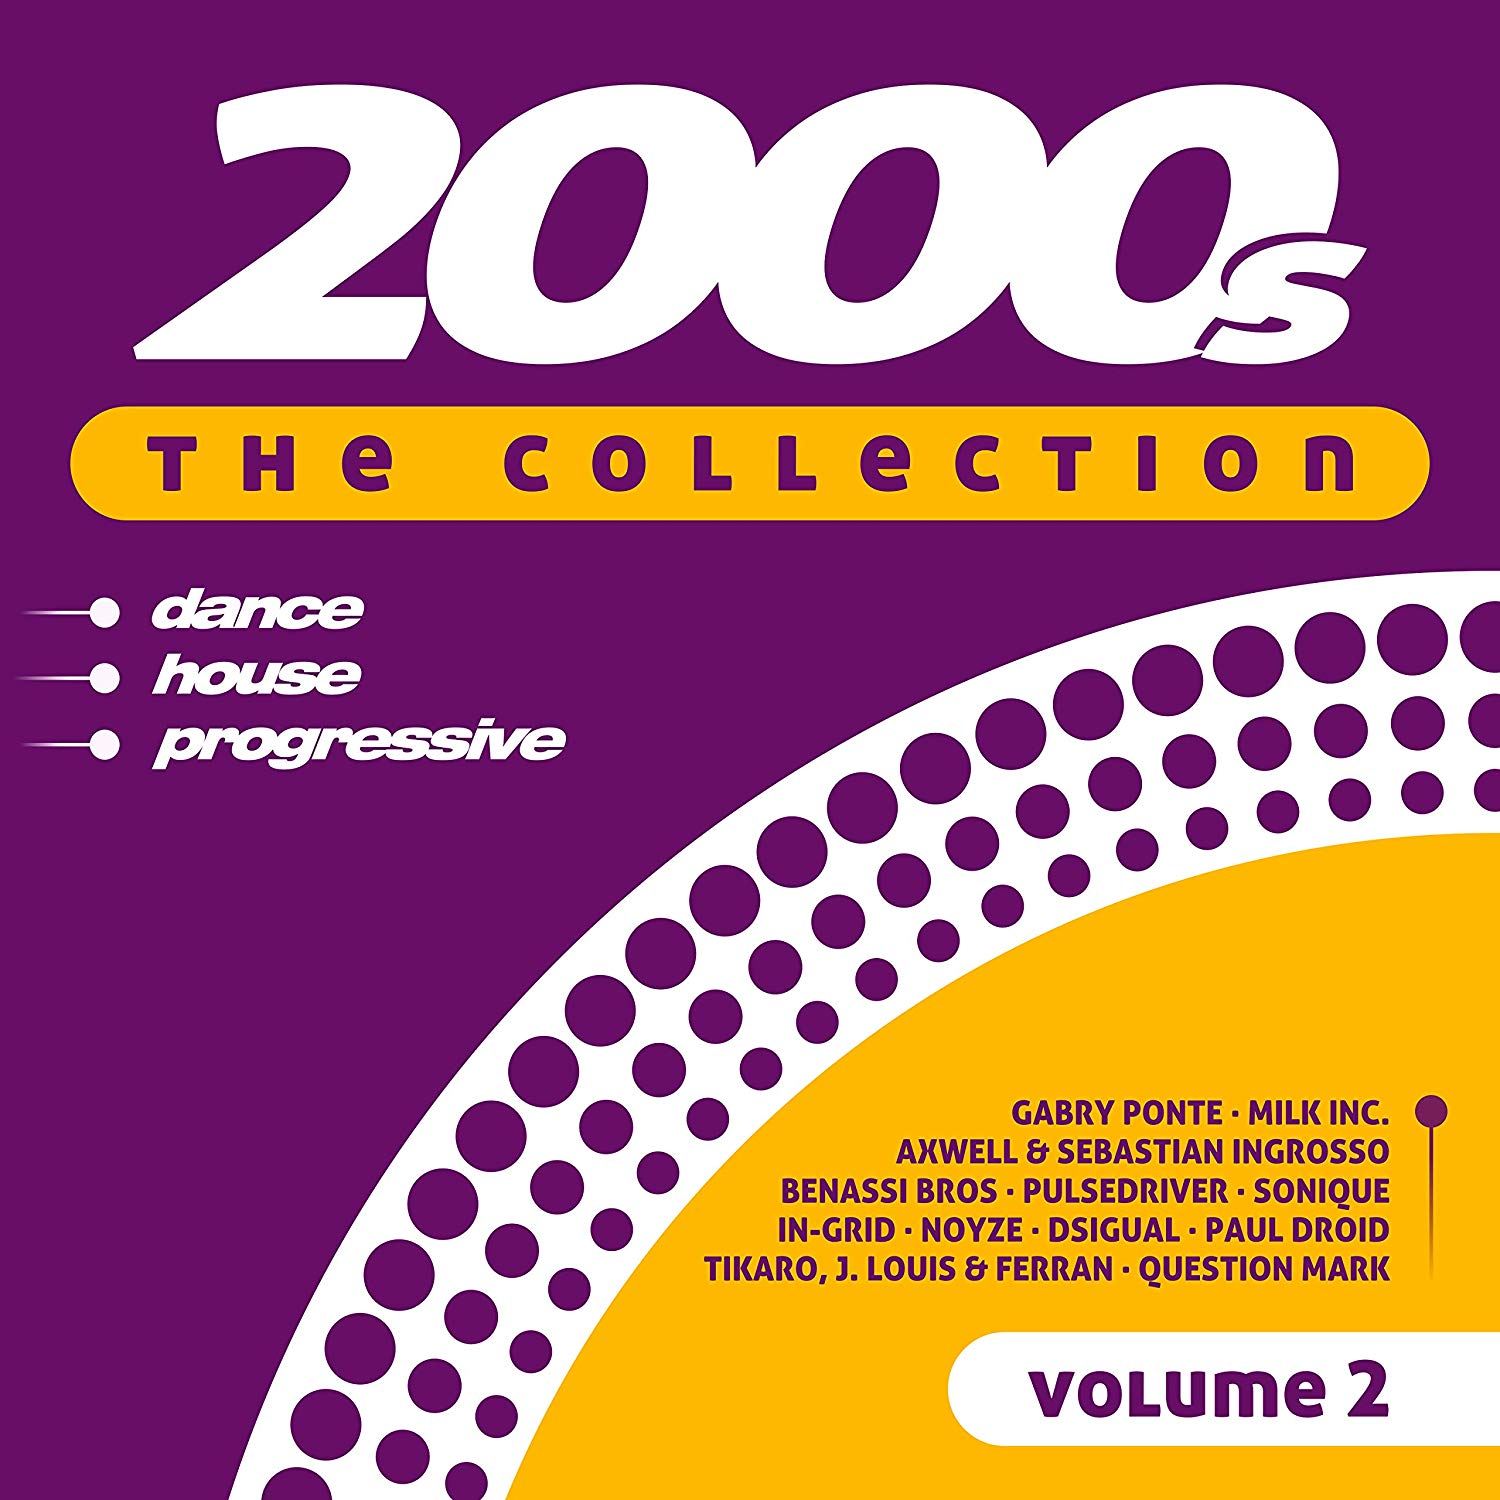 2000 collection. CD диск Dance collection. 2000s Hits. Компакт диски 2000. Сборники House 90-х.